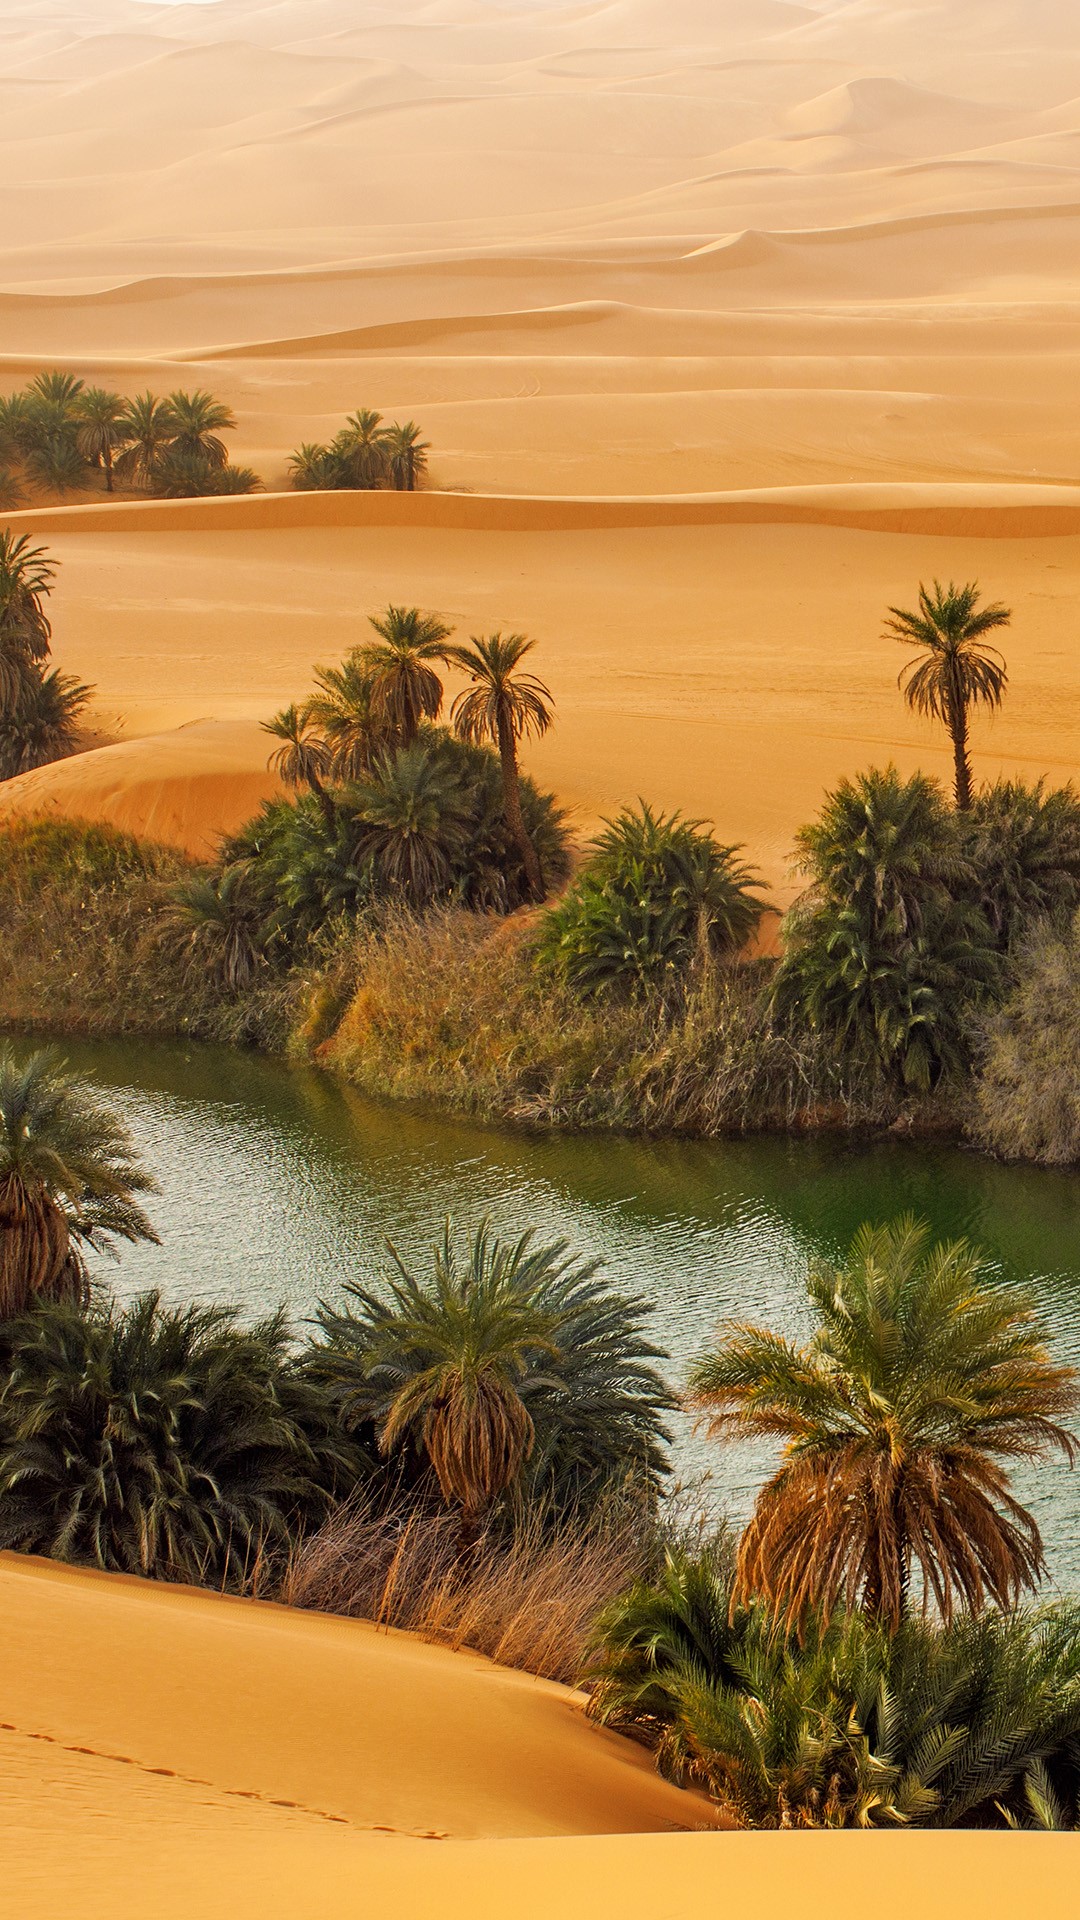 Oasis Umm-al-maa in Sahara Desert, Ubari Lakes, Libya | Windows ...